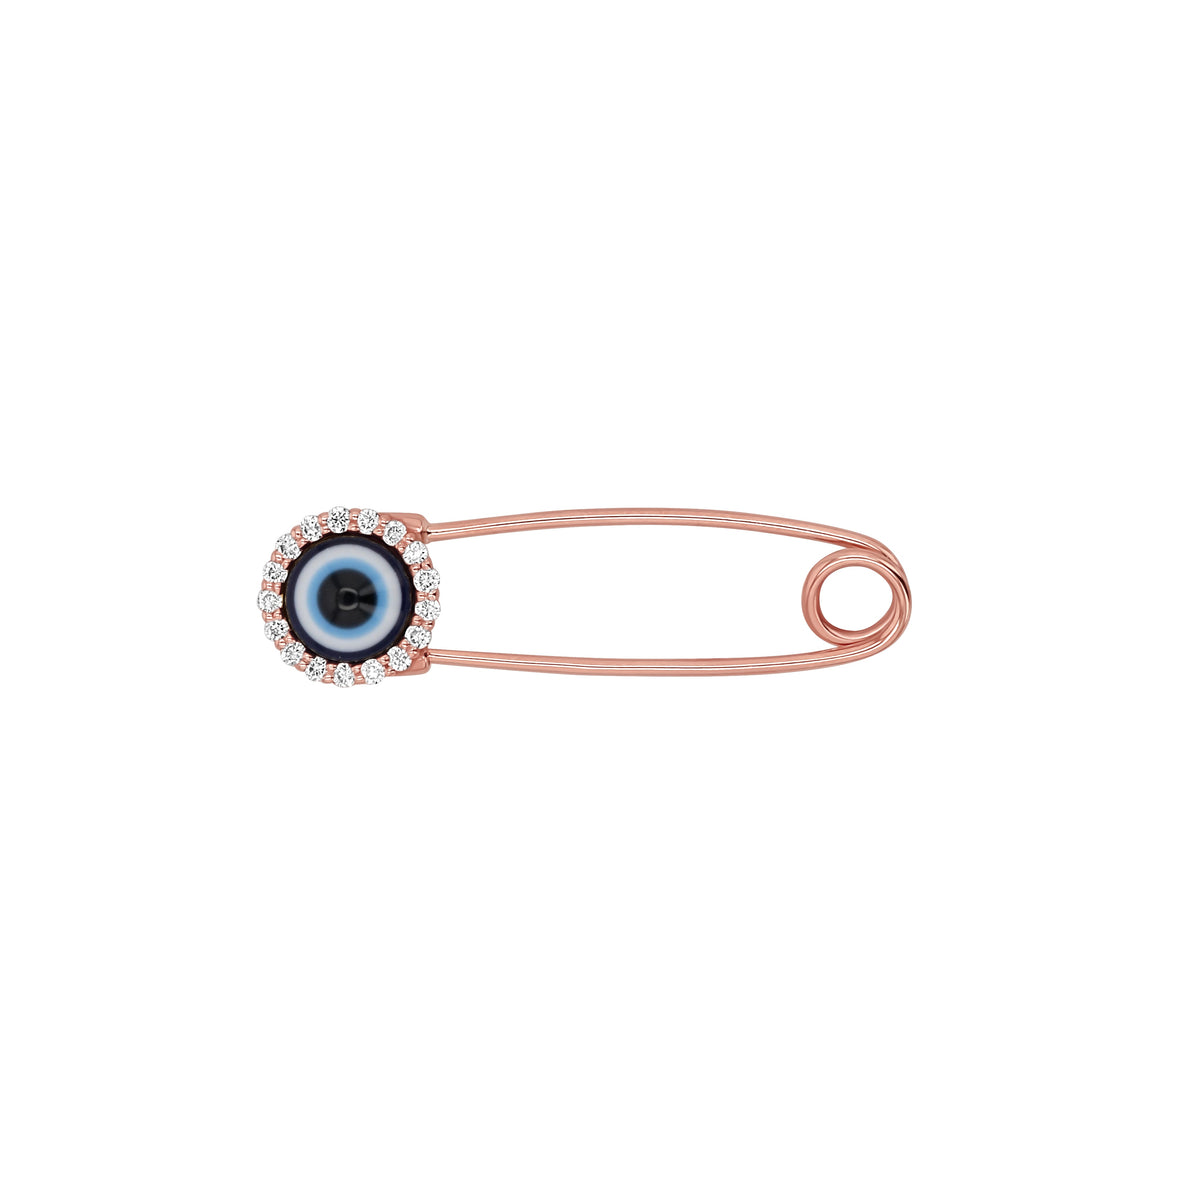 1.5 Gold Eye Pin - 40 Pack – Beads, Inc.